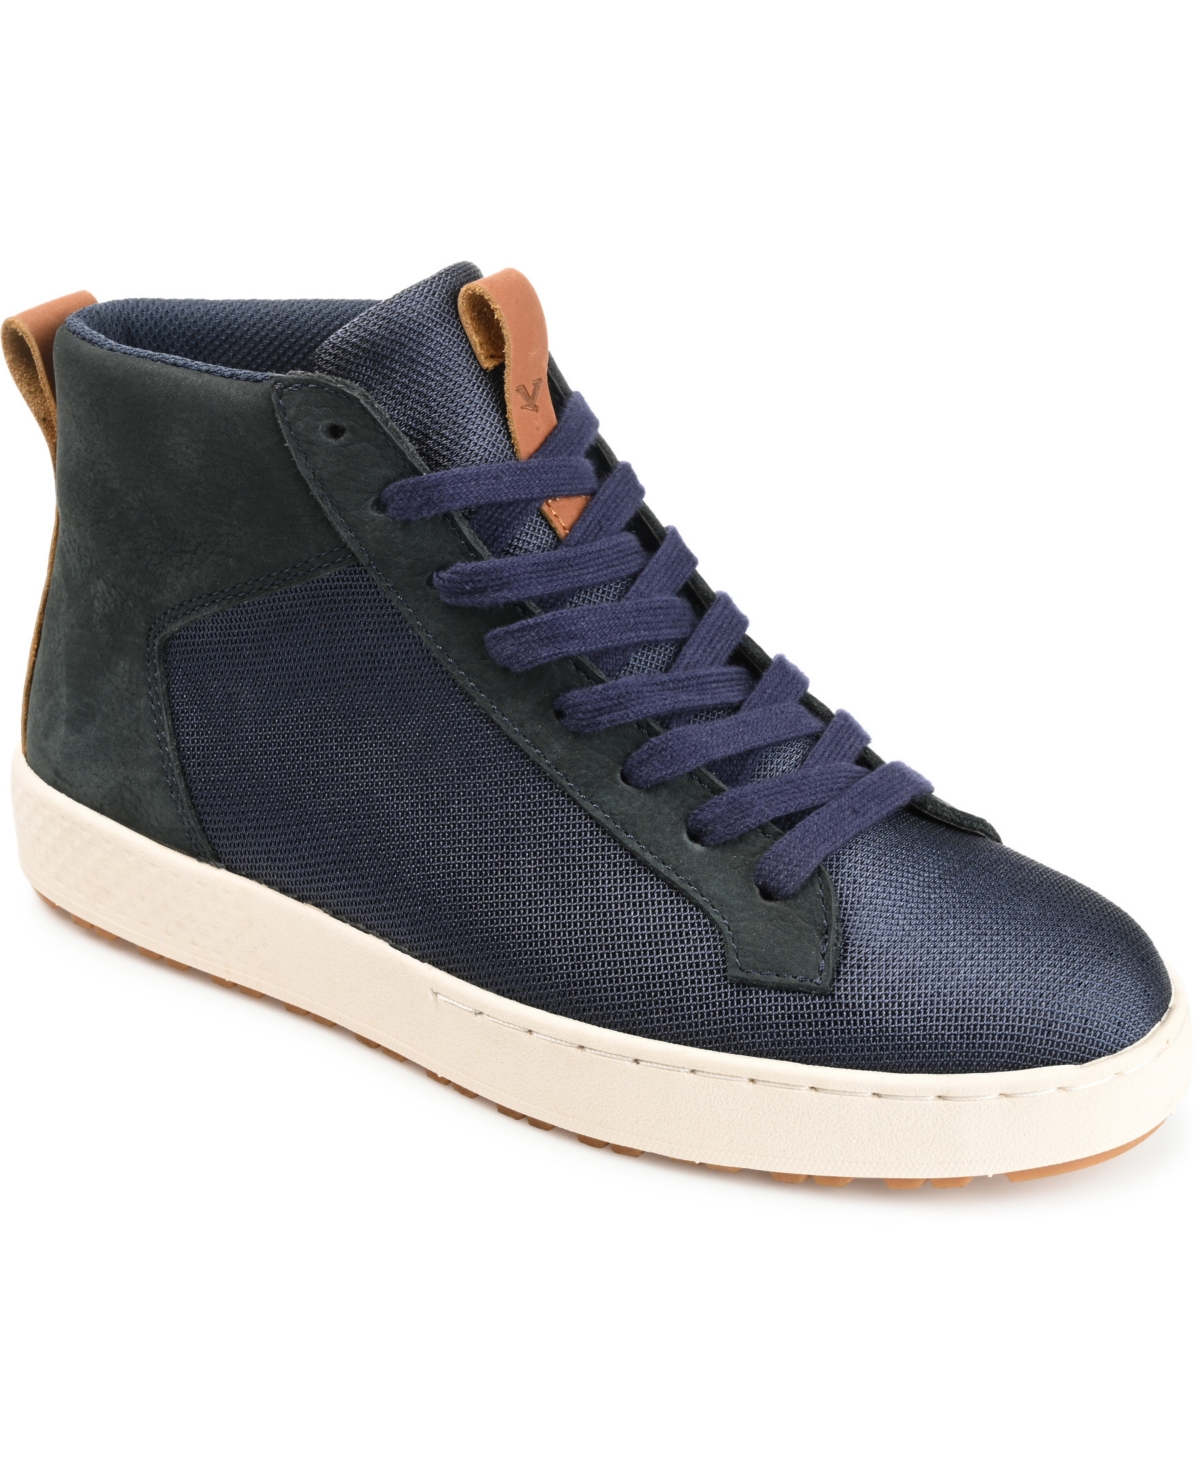 Men's Carlsbad Knit High Top Sneaker Boots - Blue